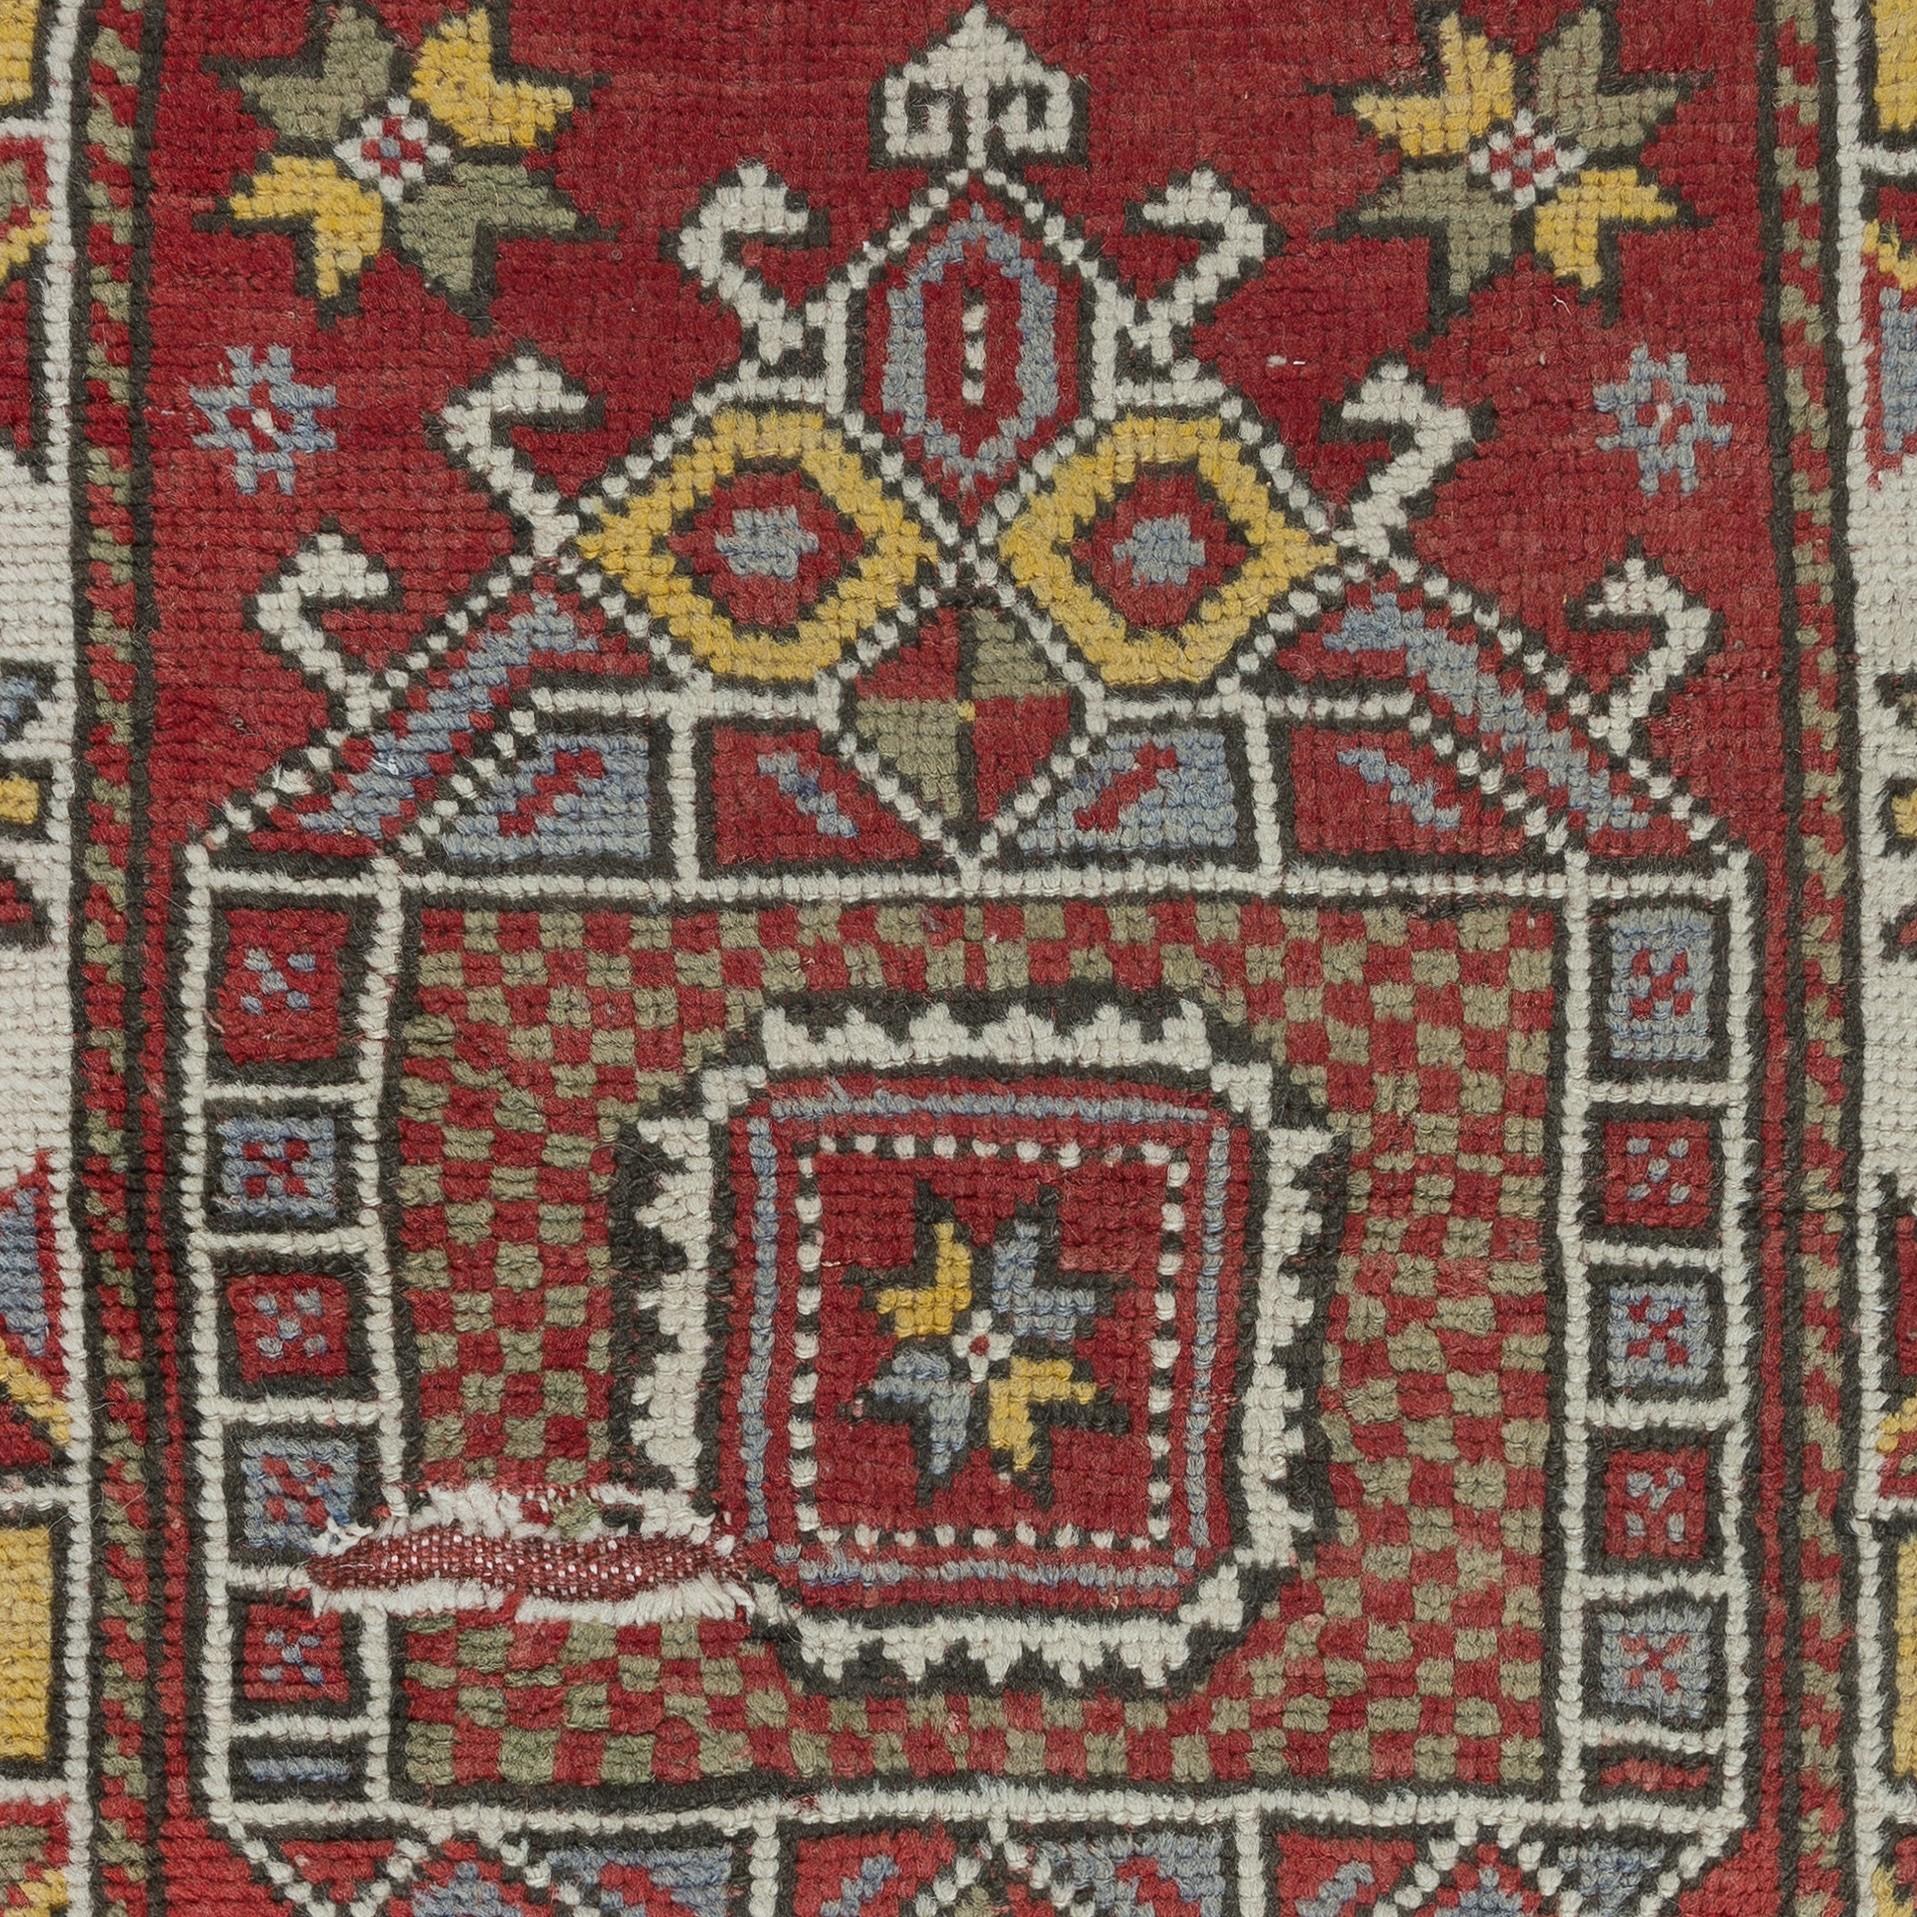 2.4x3.2 Ft Handmade Geometric Medallion Design Rug, Vintage Turkish Red Carpet In Good Condition For Sale In Philadelphia, PA